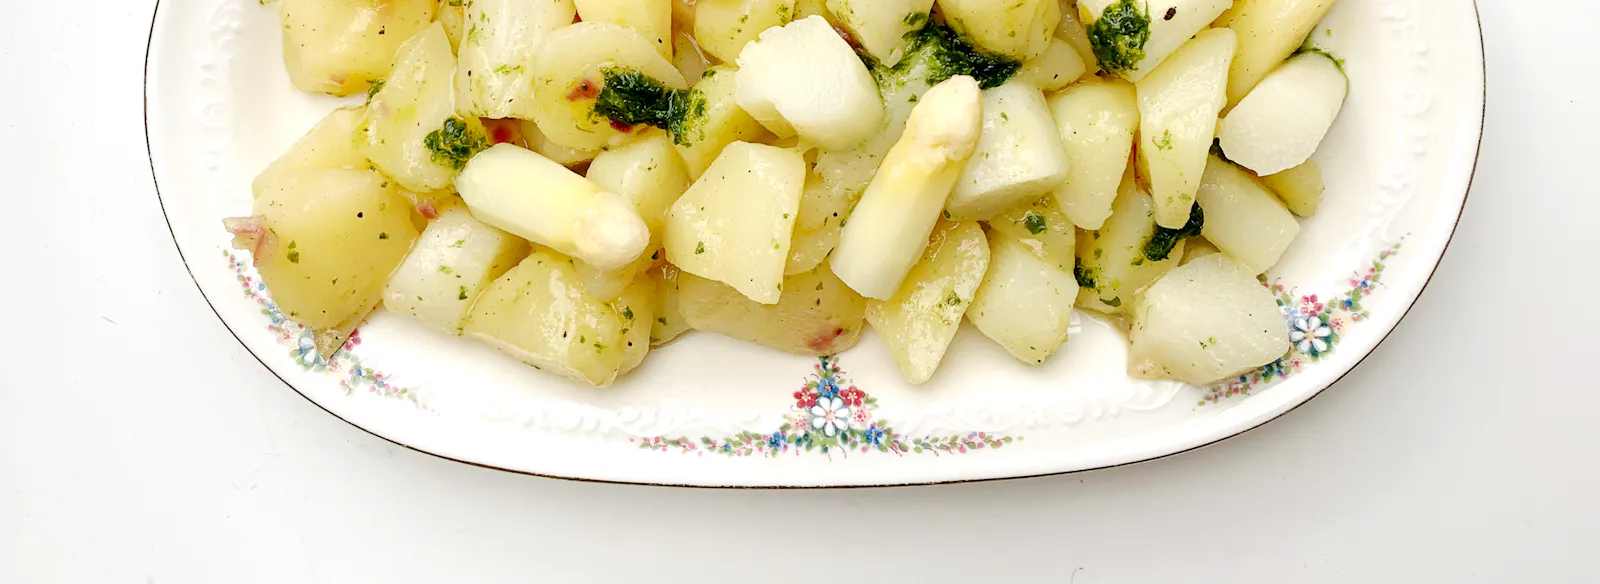 Kartoffel-Spargel-Salat